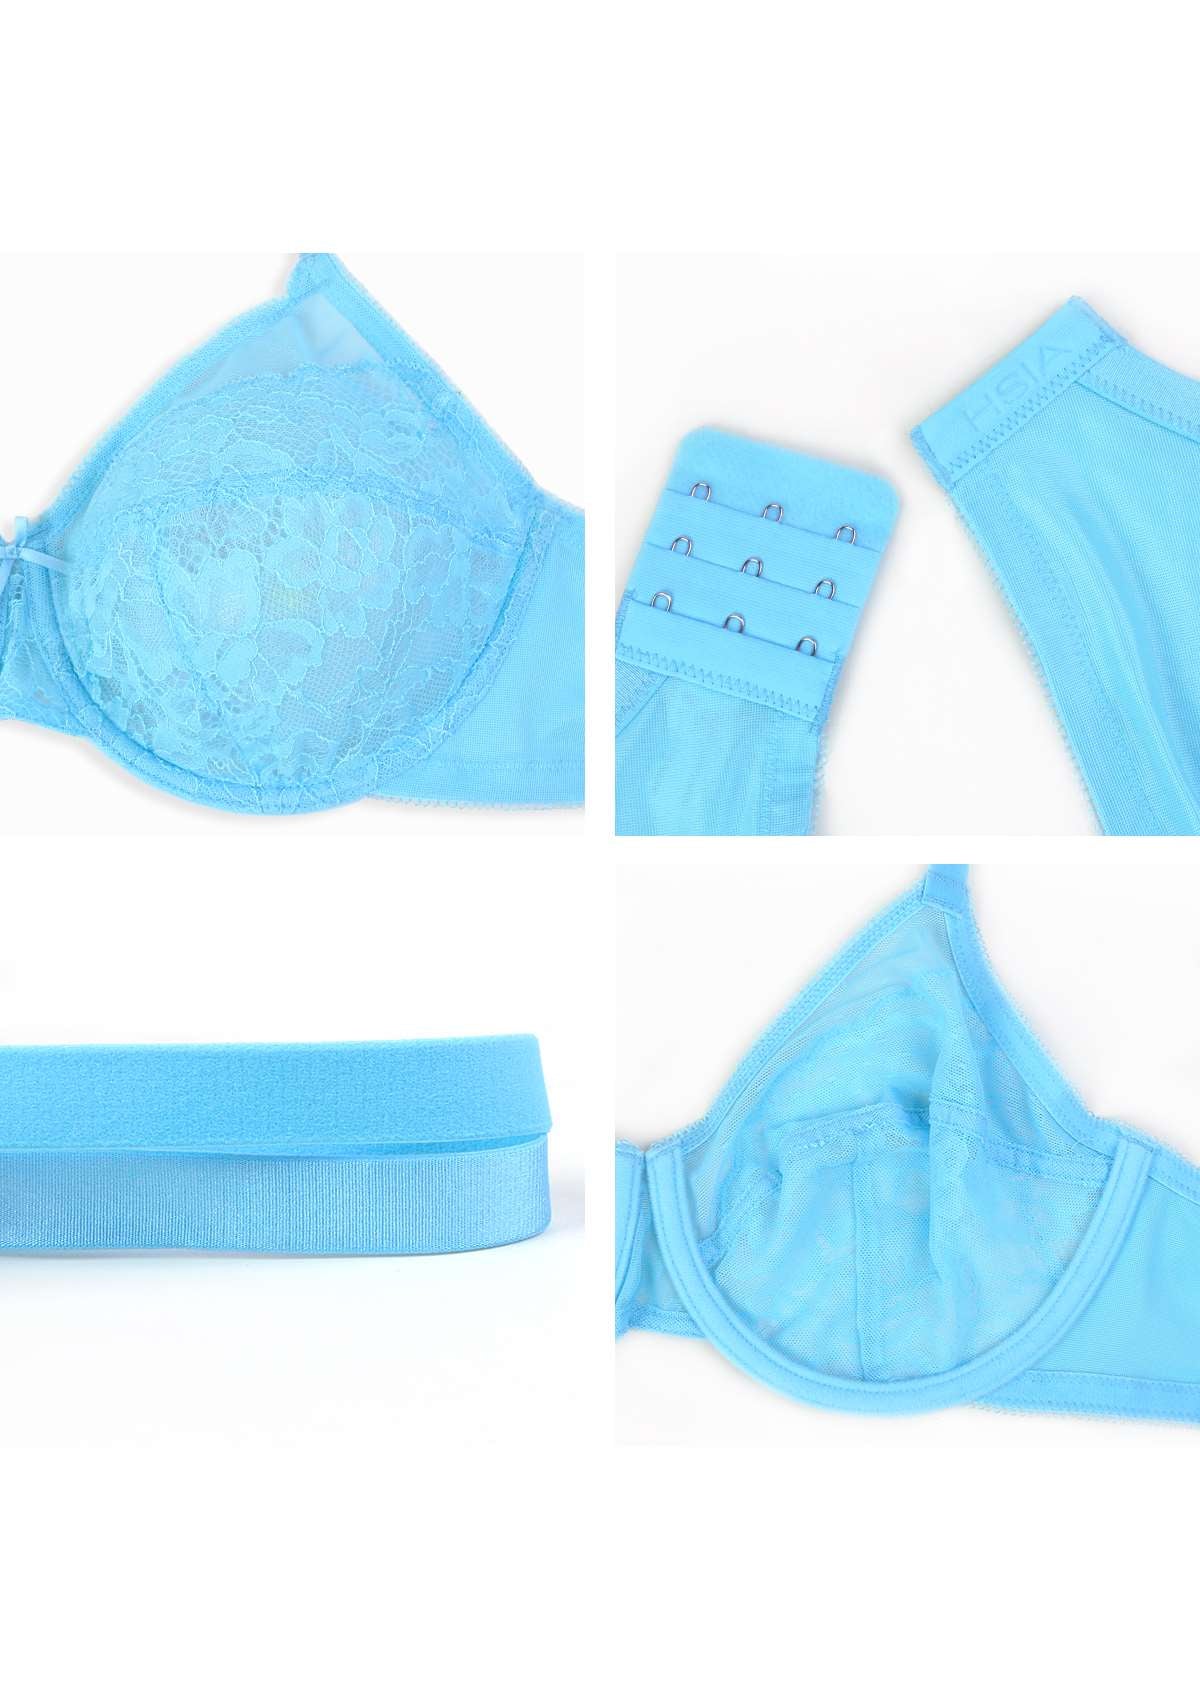 HSIA Enchante Minimizer Lace Bra: Full Support For Heavy Breasts - Capri Blue / 34 / G